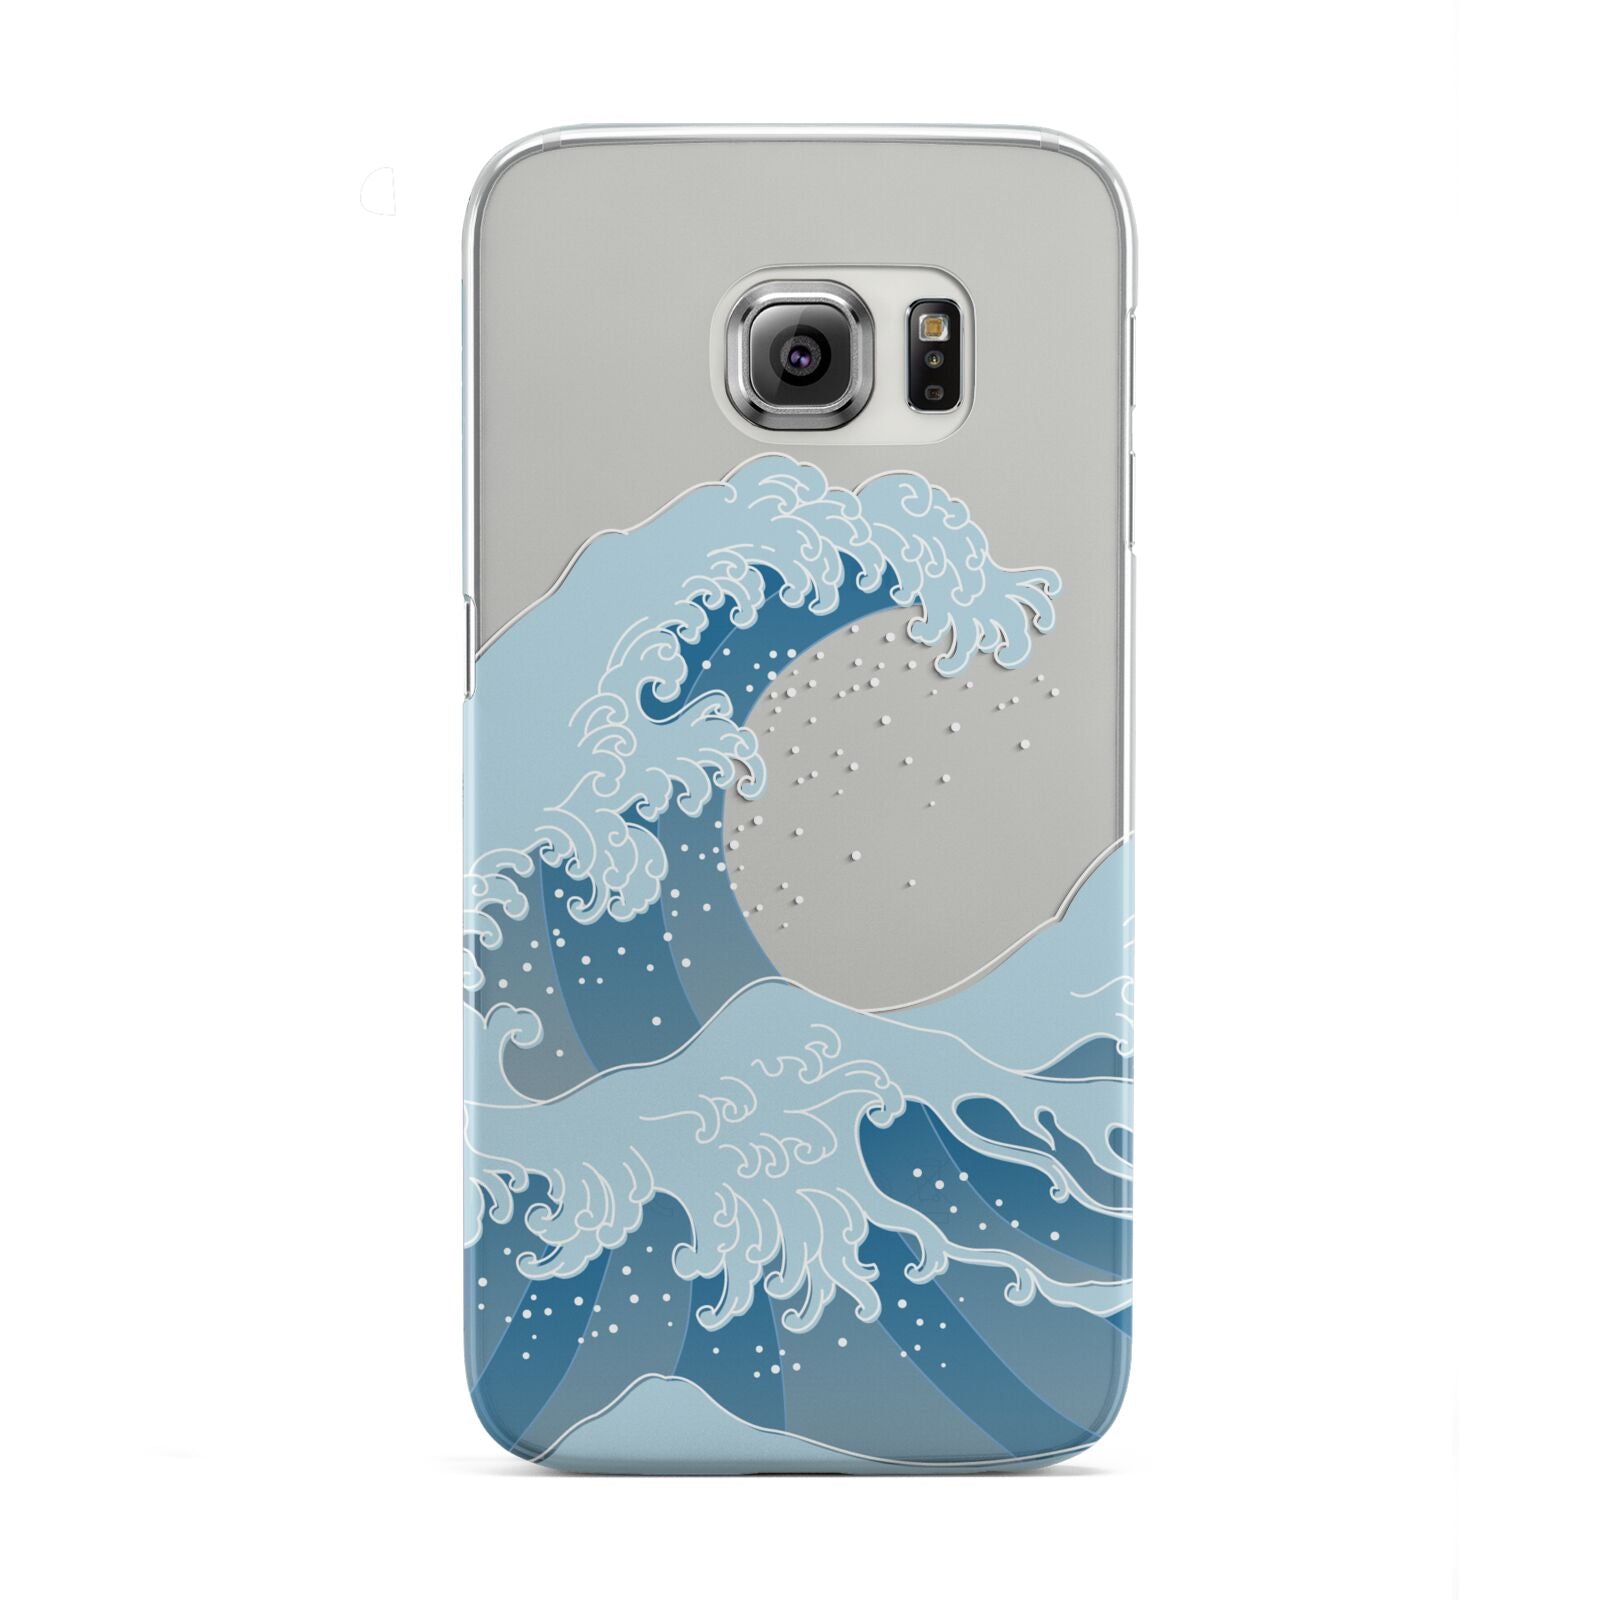 Great Wave Illustration Samsung Galaxy S6 Edge Case